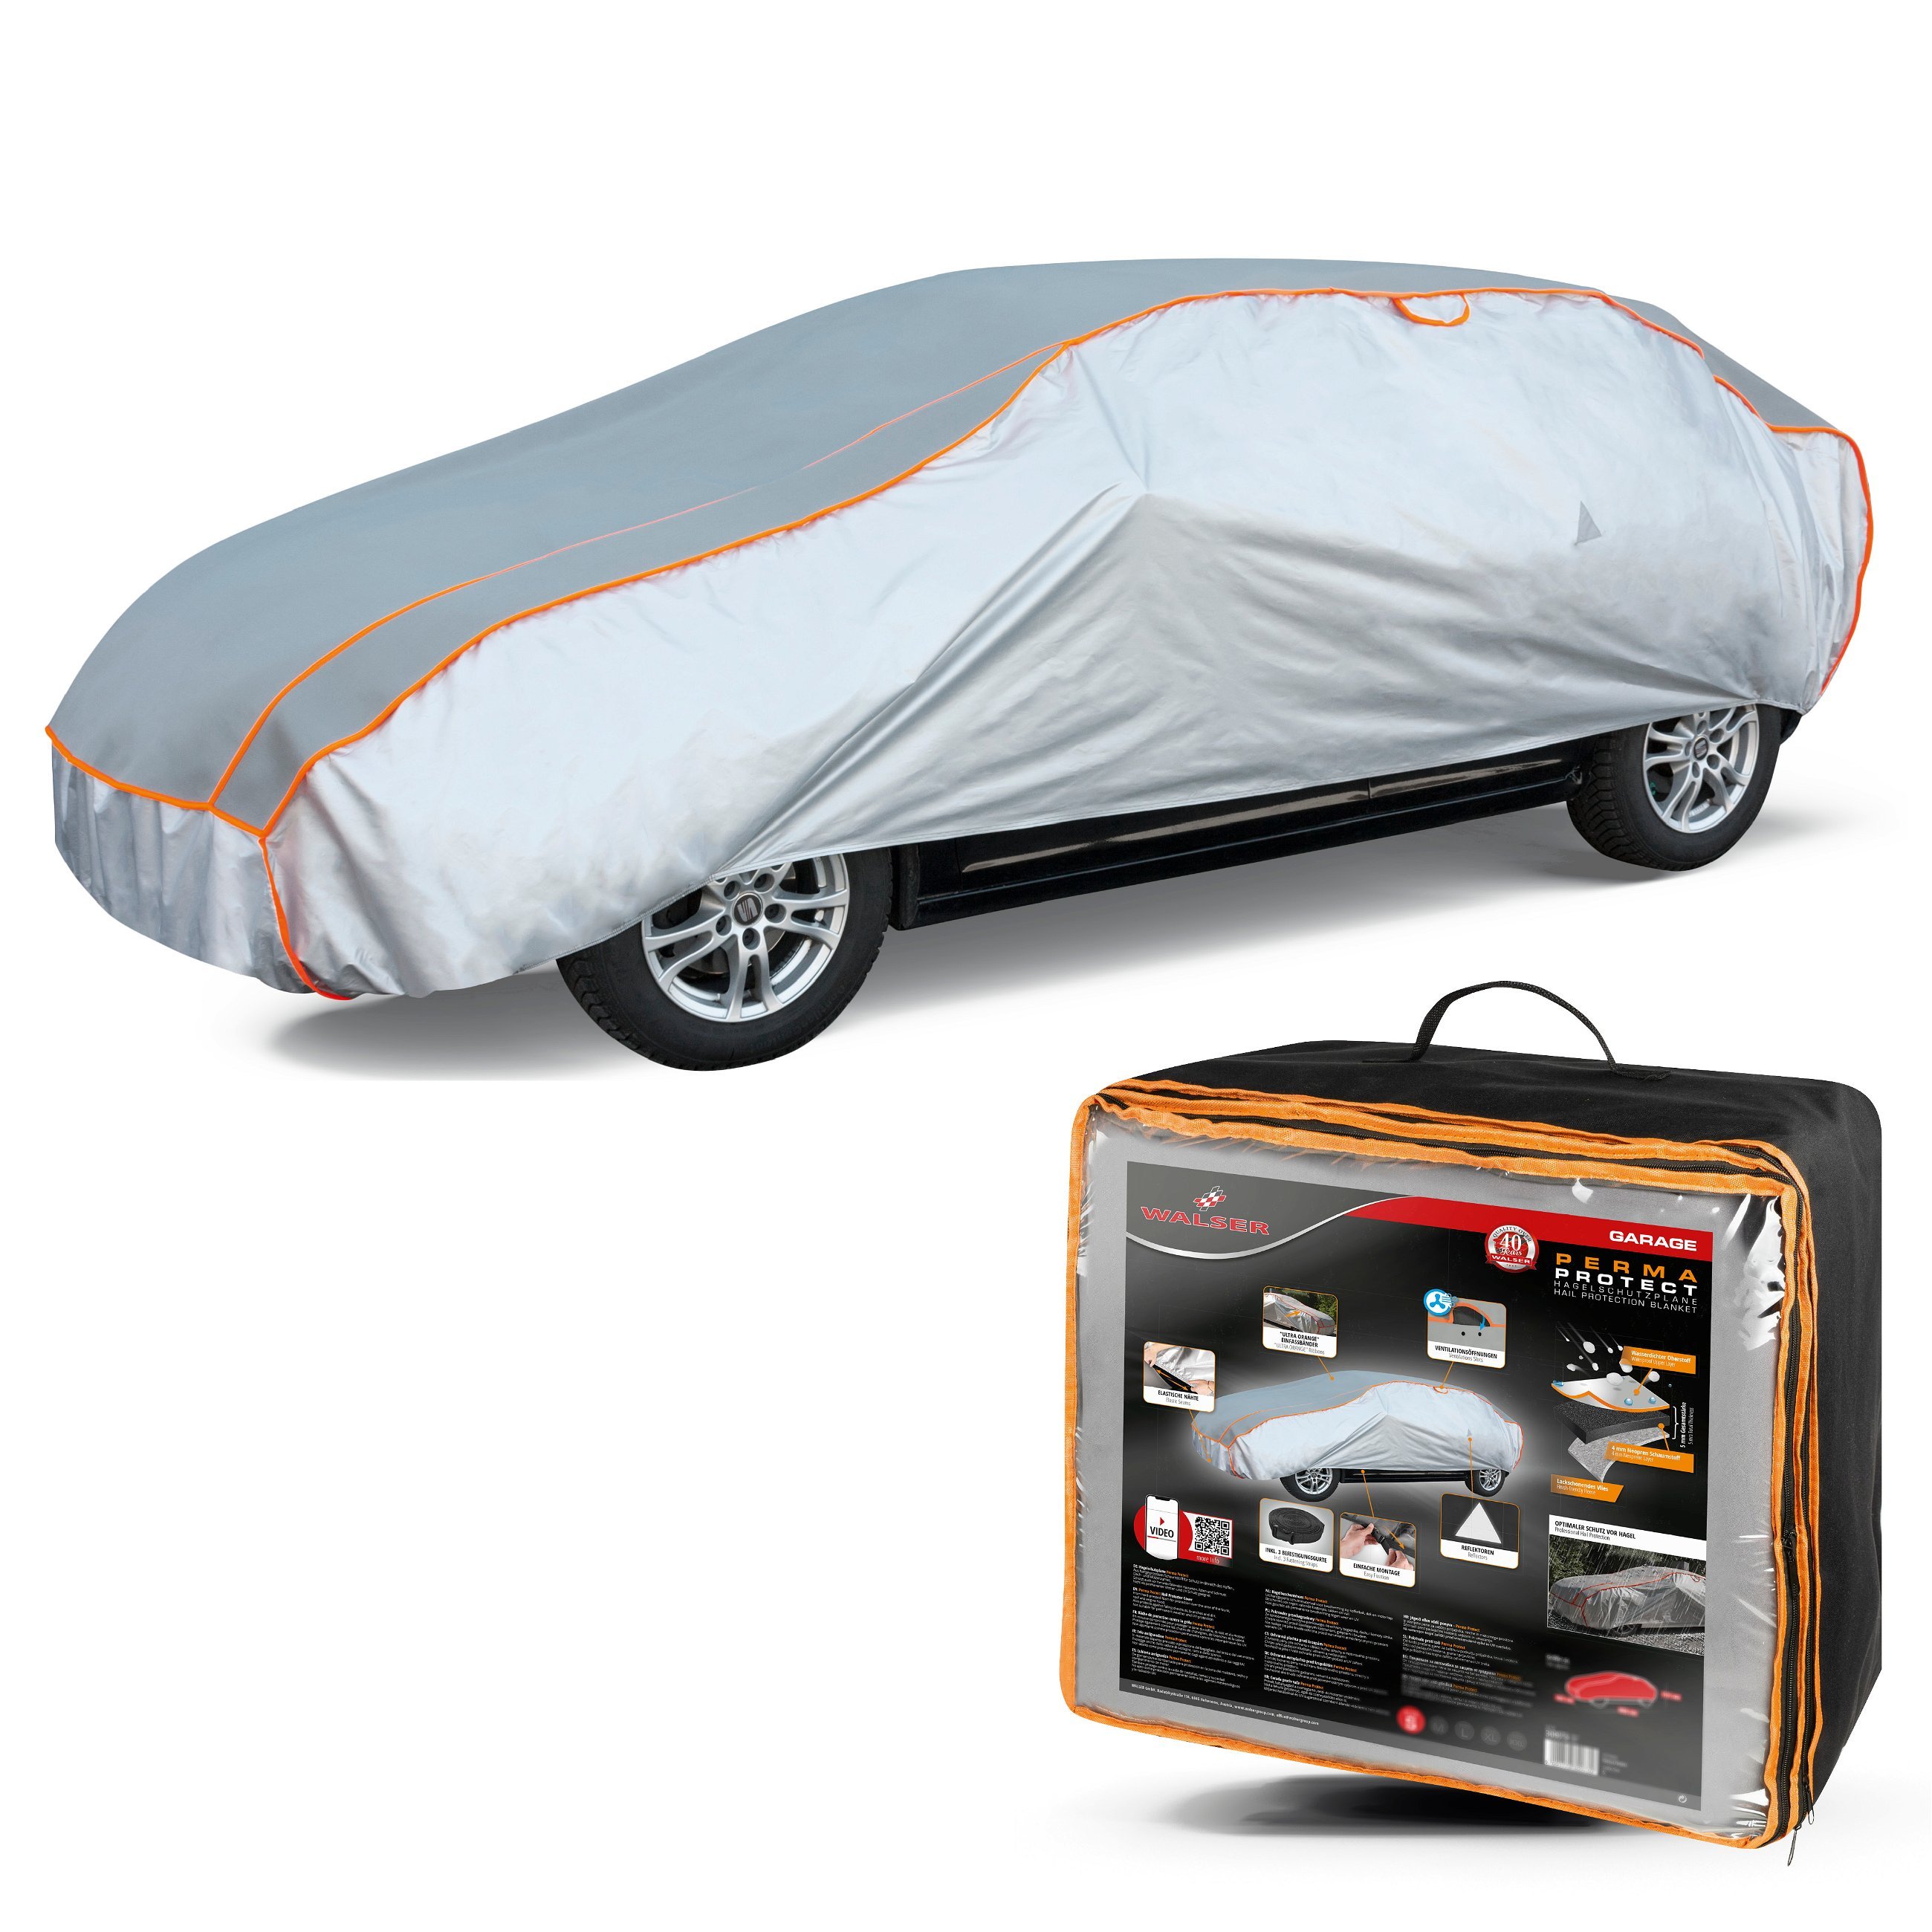 Car hail protection tarpaulin Perma Protect size XL